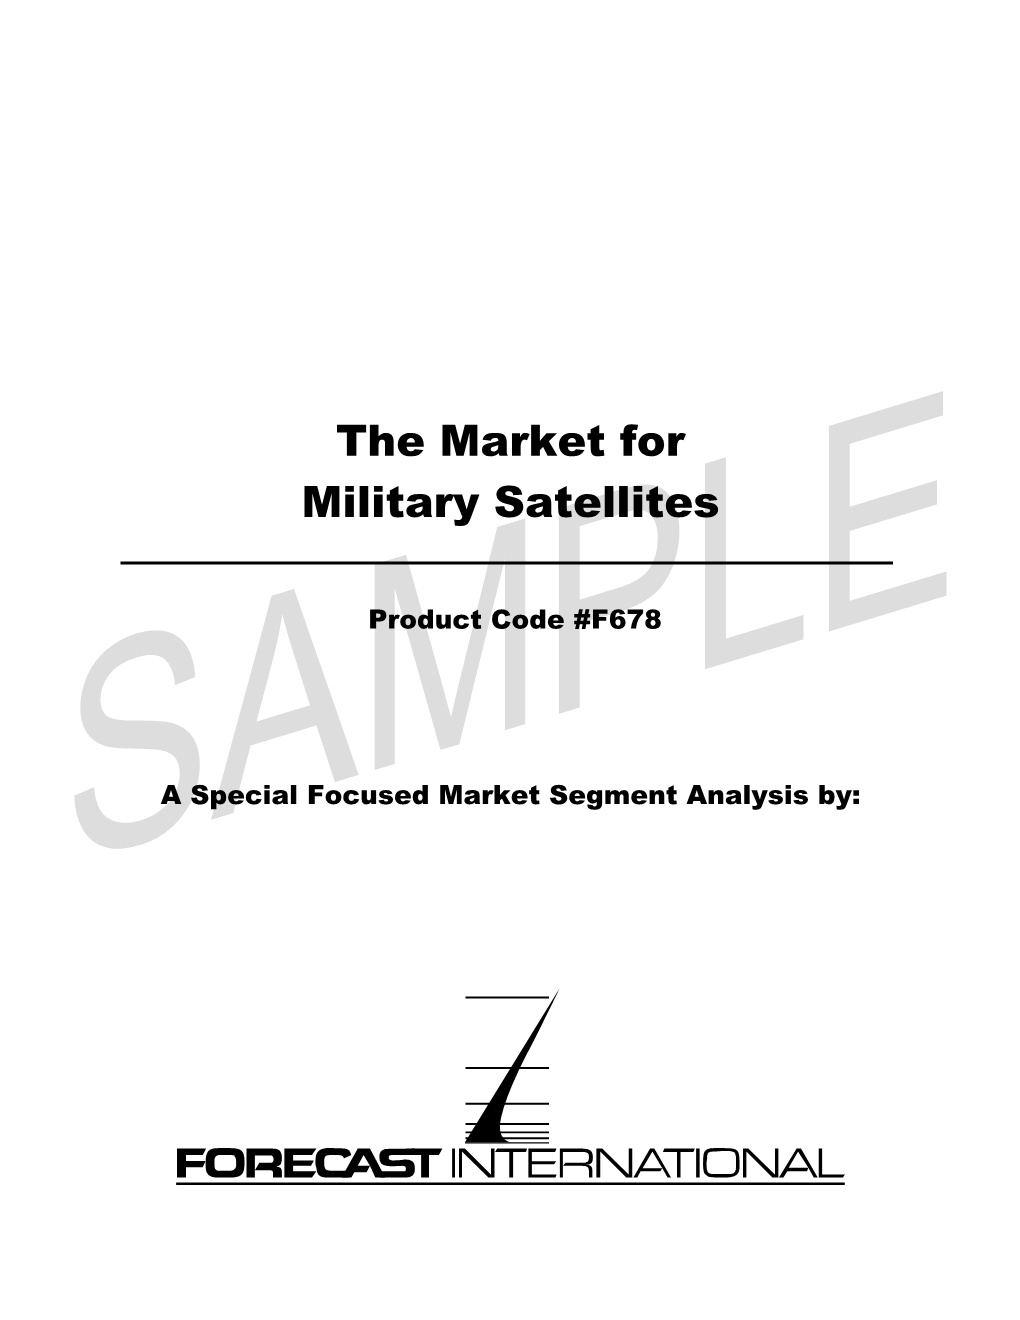 The Market for Military Satellites